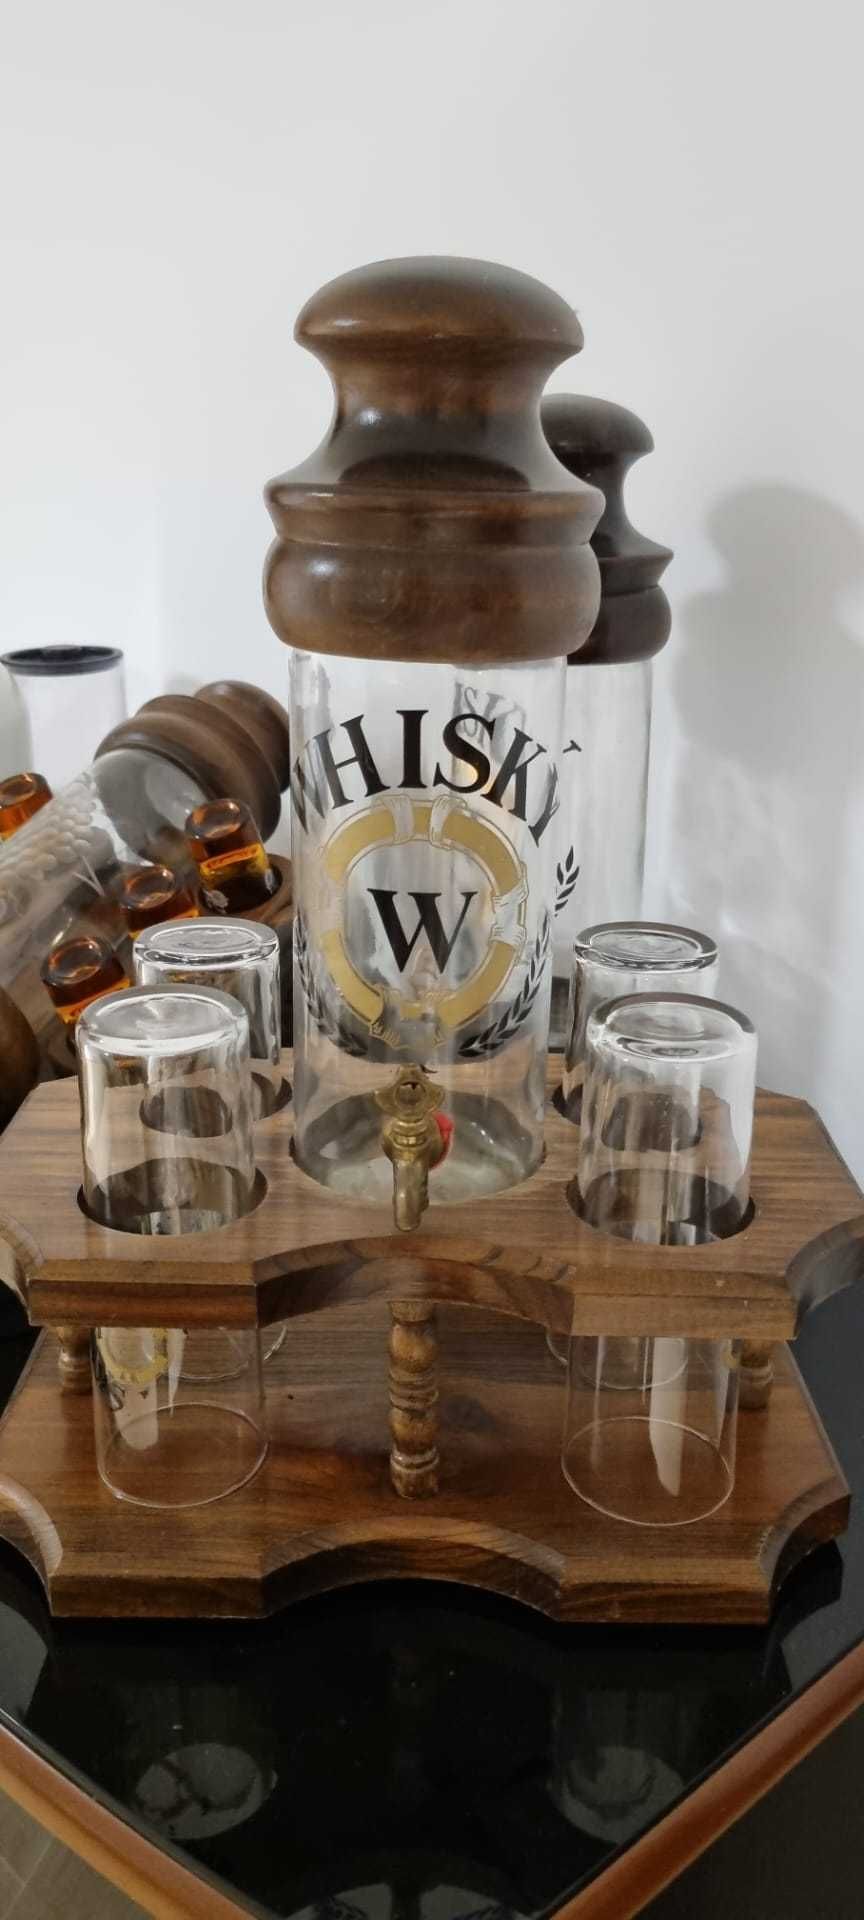 garrafa fantasia whisky velho + suporte + 4 copos